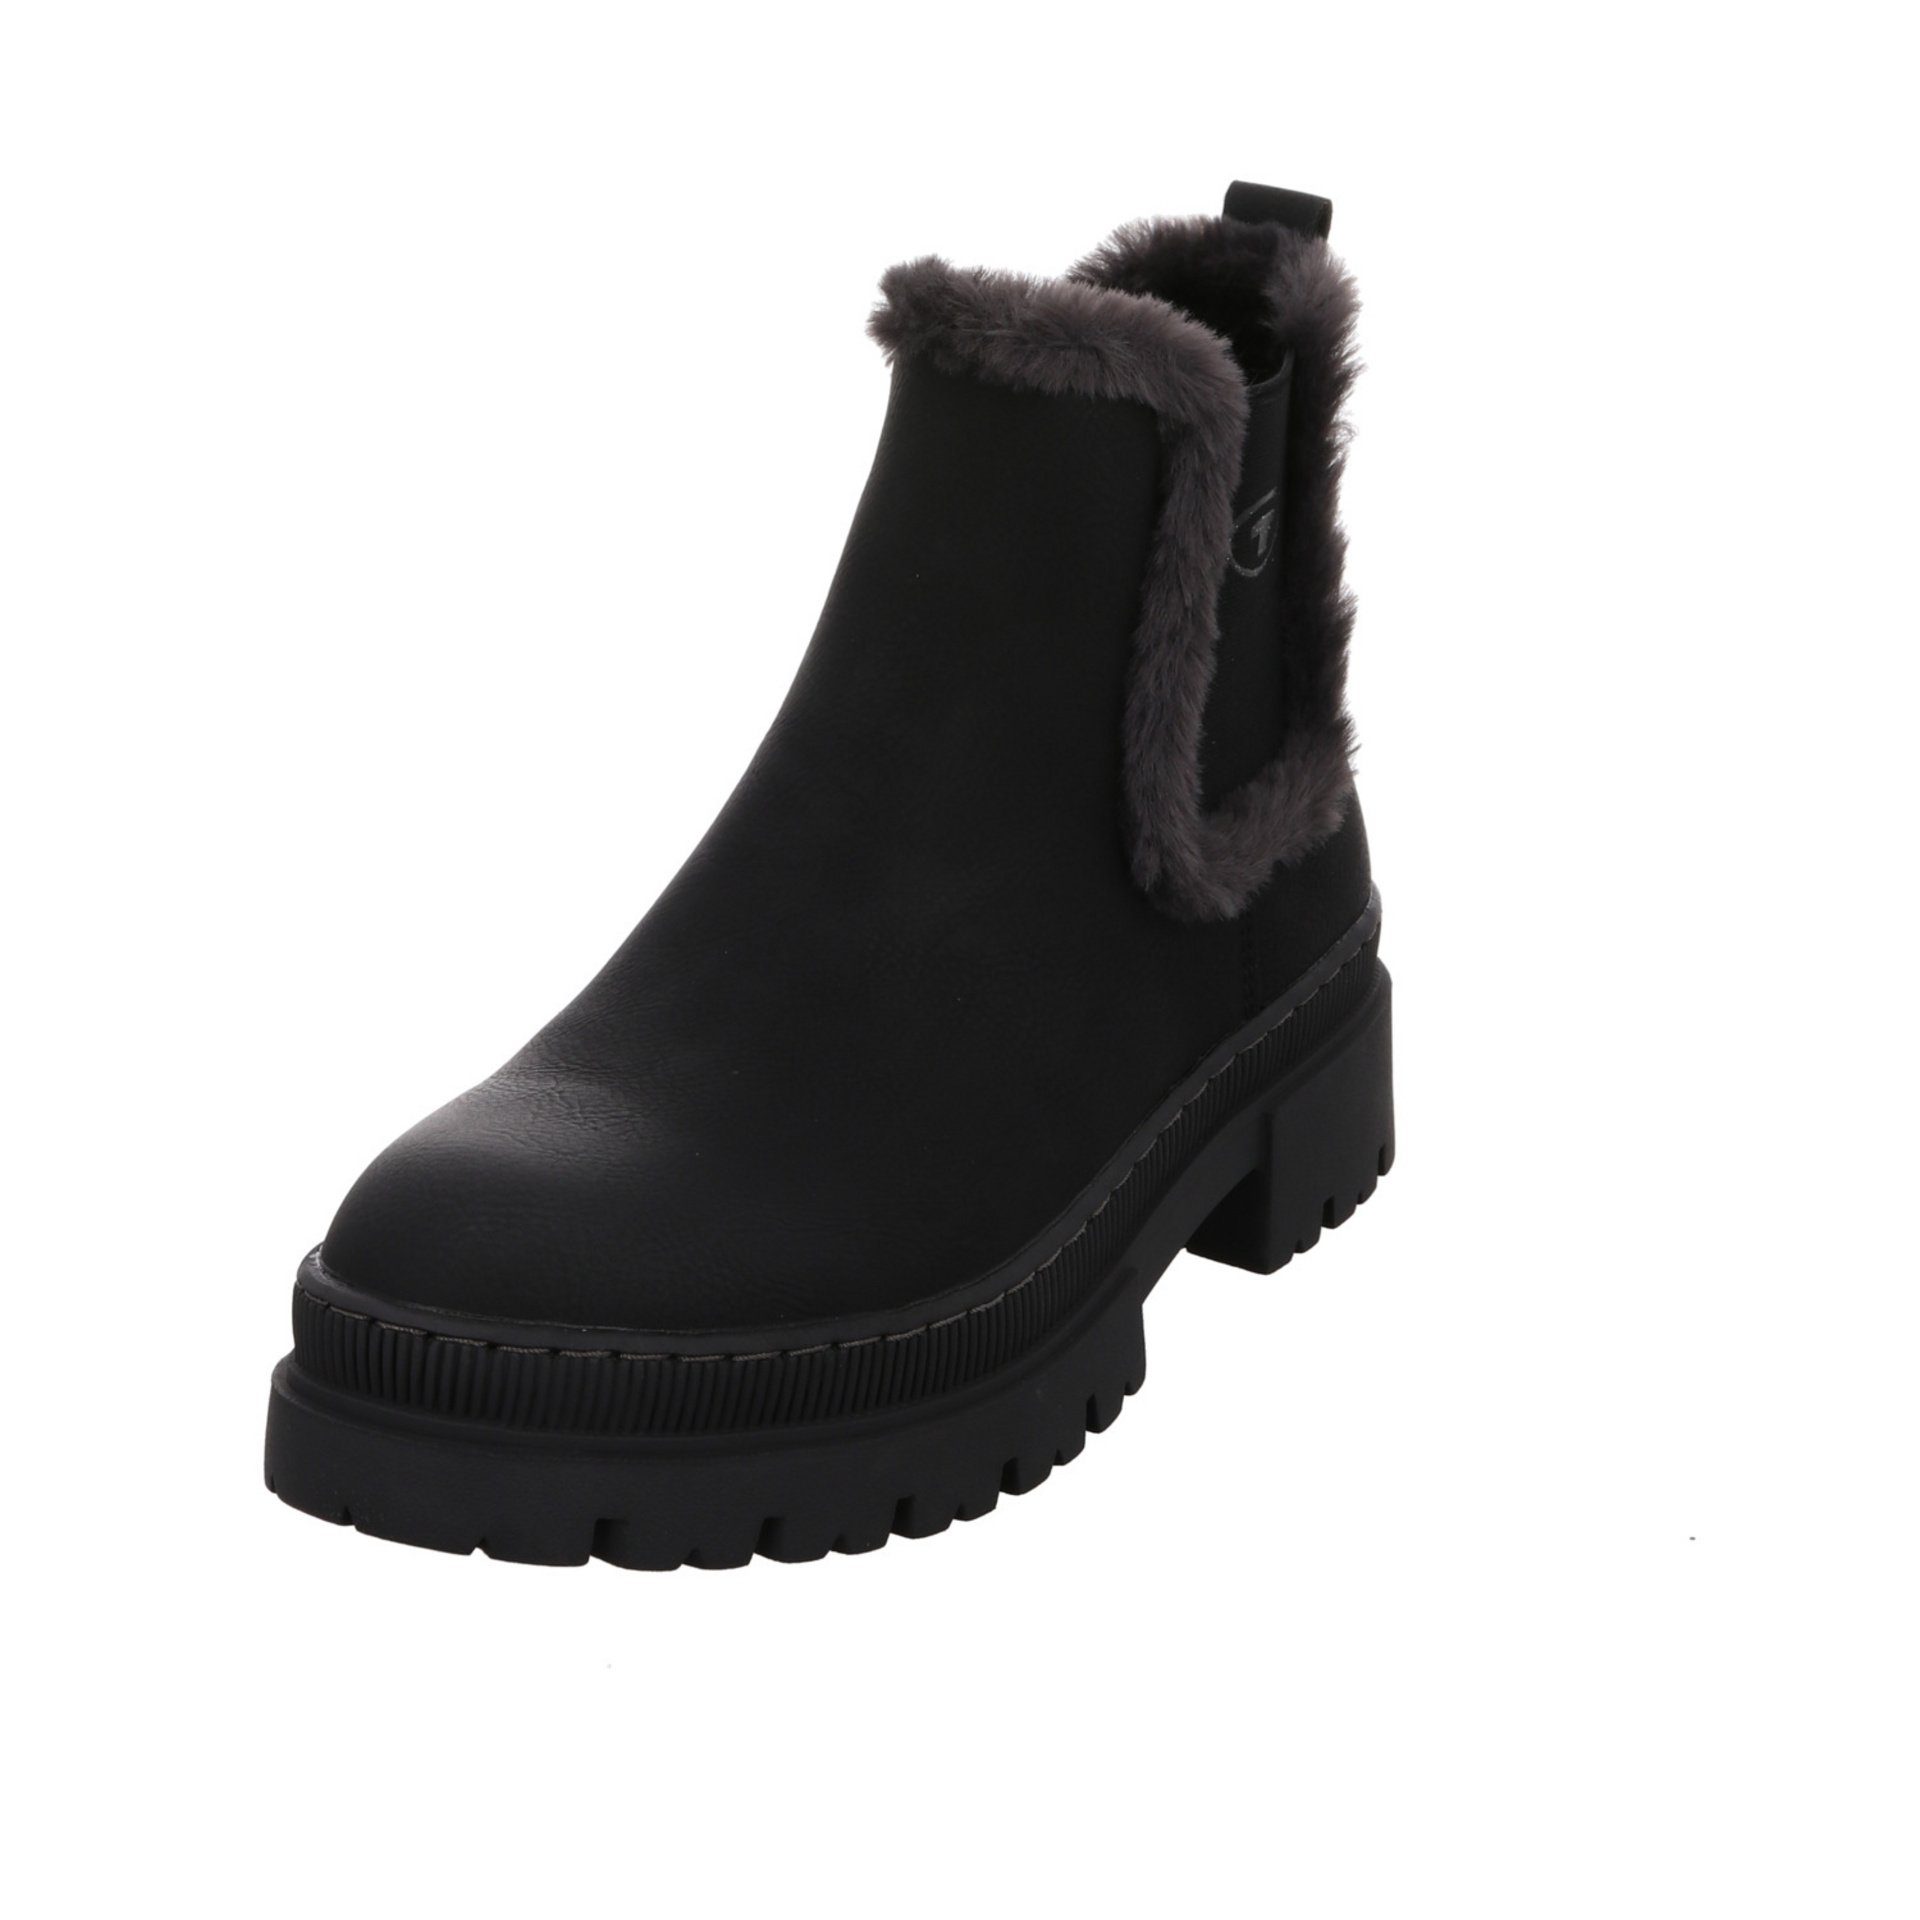 TOM TAILOR Damen Stiefel Schuhe Chelsea Boots Stiefel Synthetik black